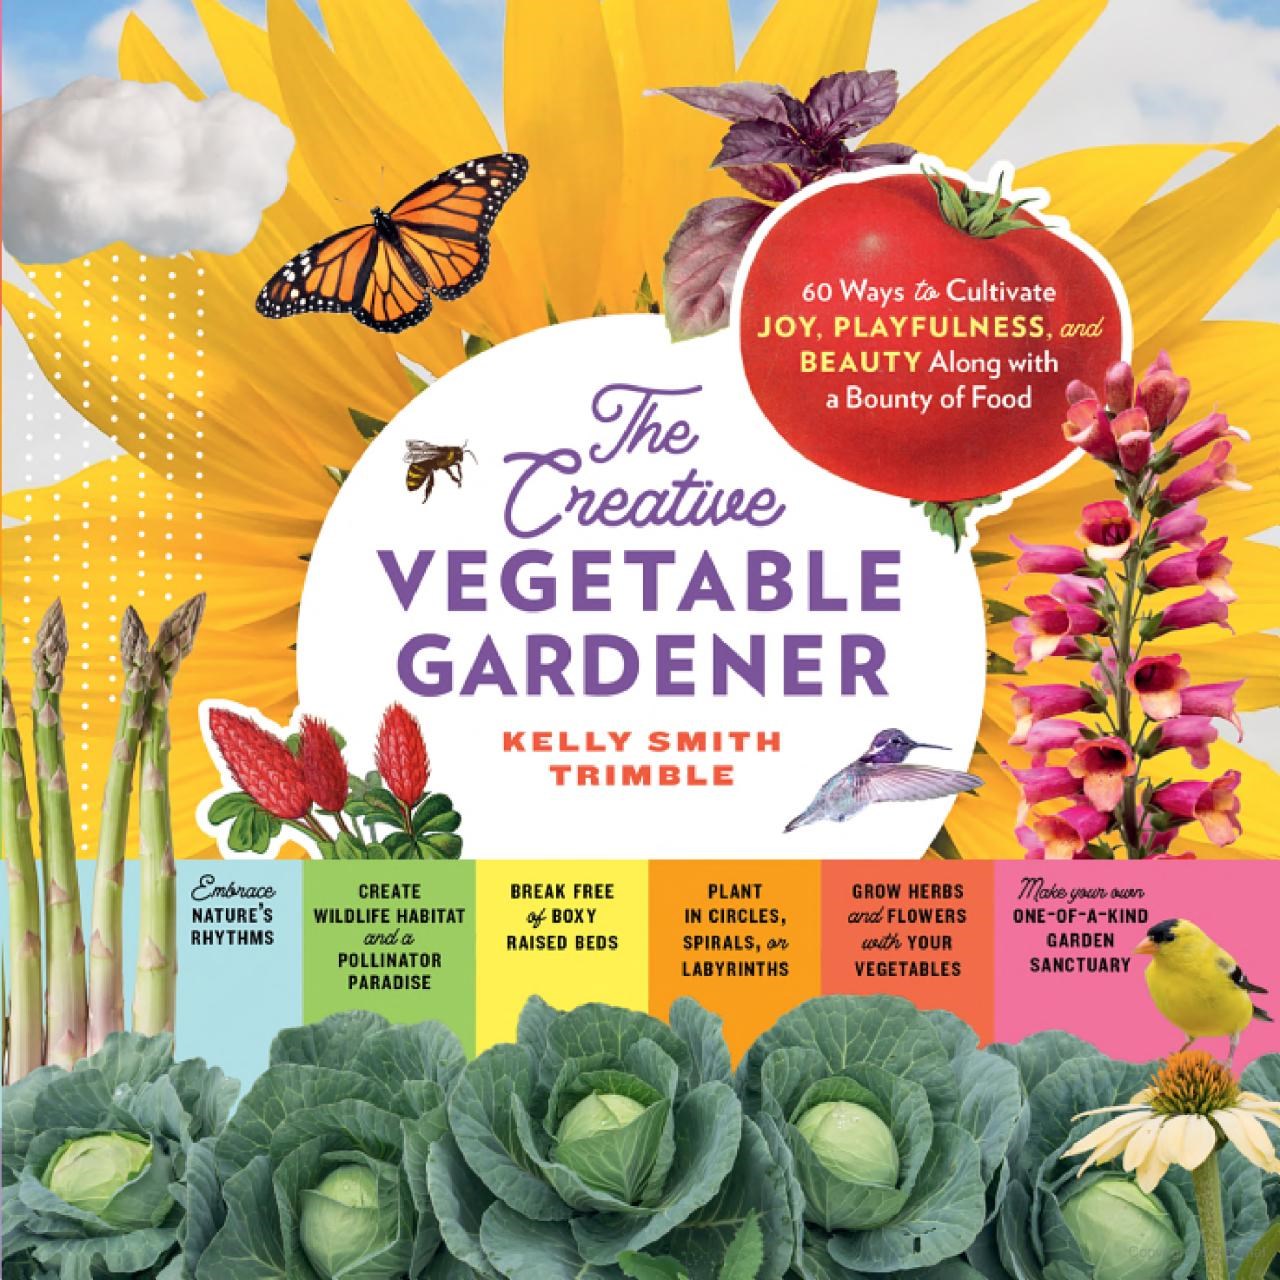 Book jacket for "The Creative Vegetable Gardener"